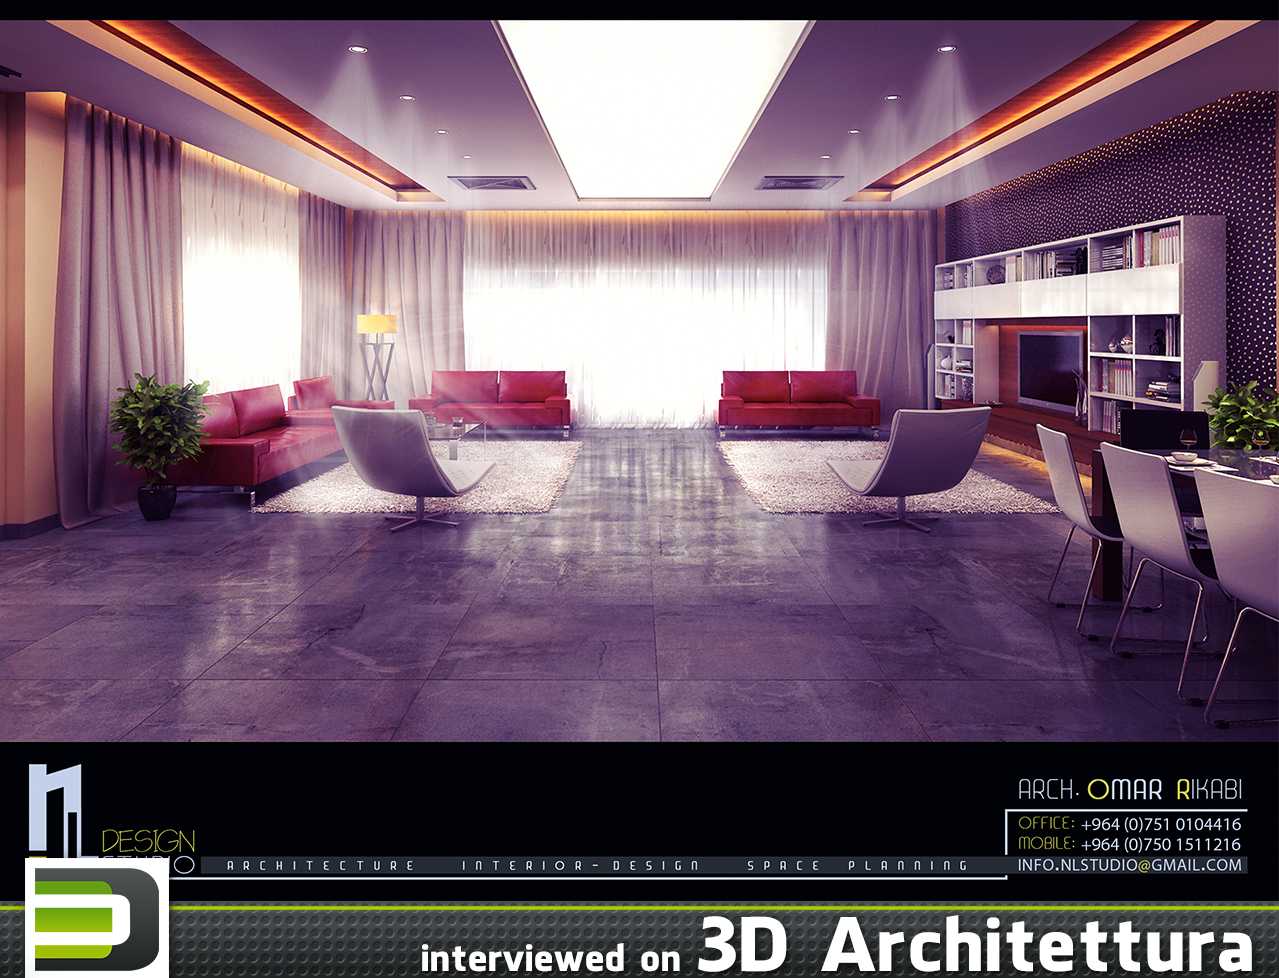 Omar Rikabi interviewed on 3D Architettura: architecture, design, render, 3d, CG. www.3darchitettura.com